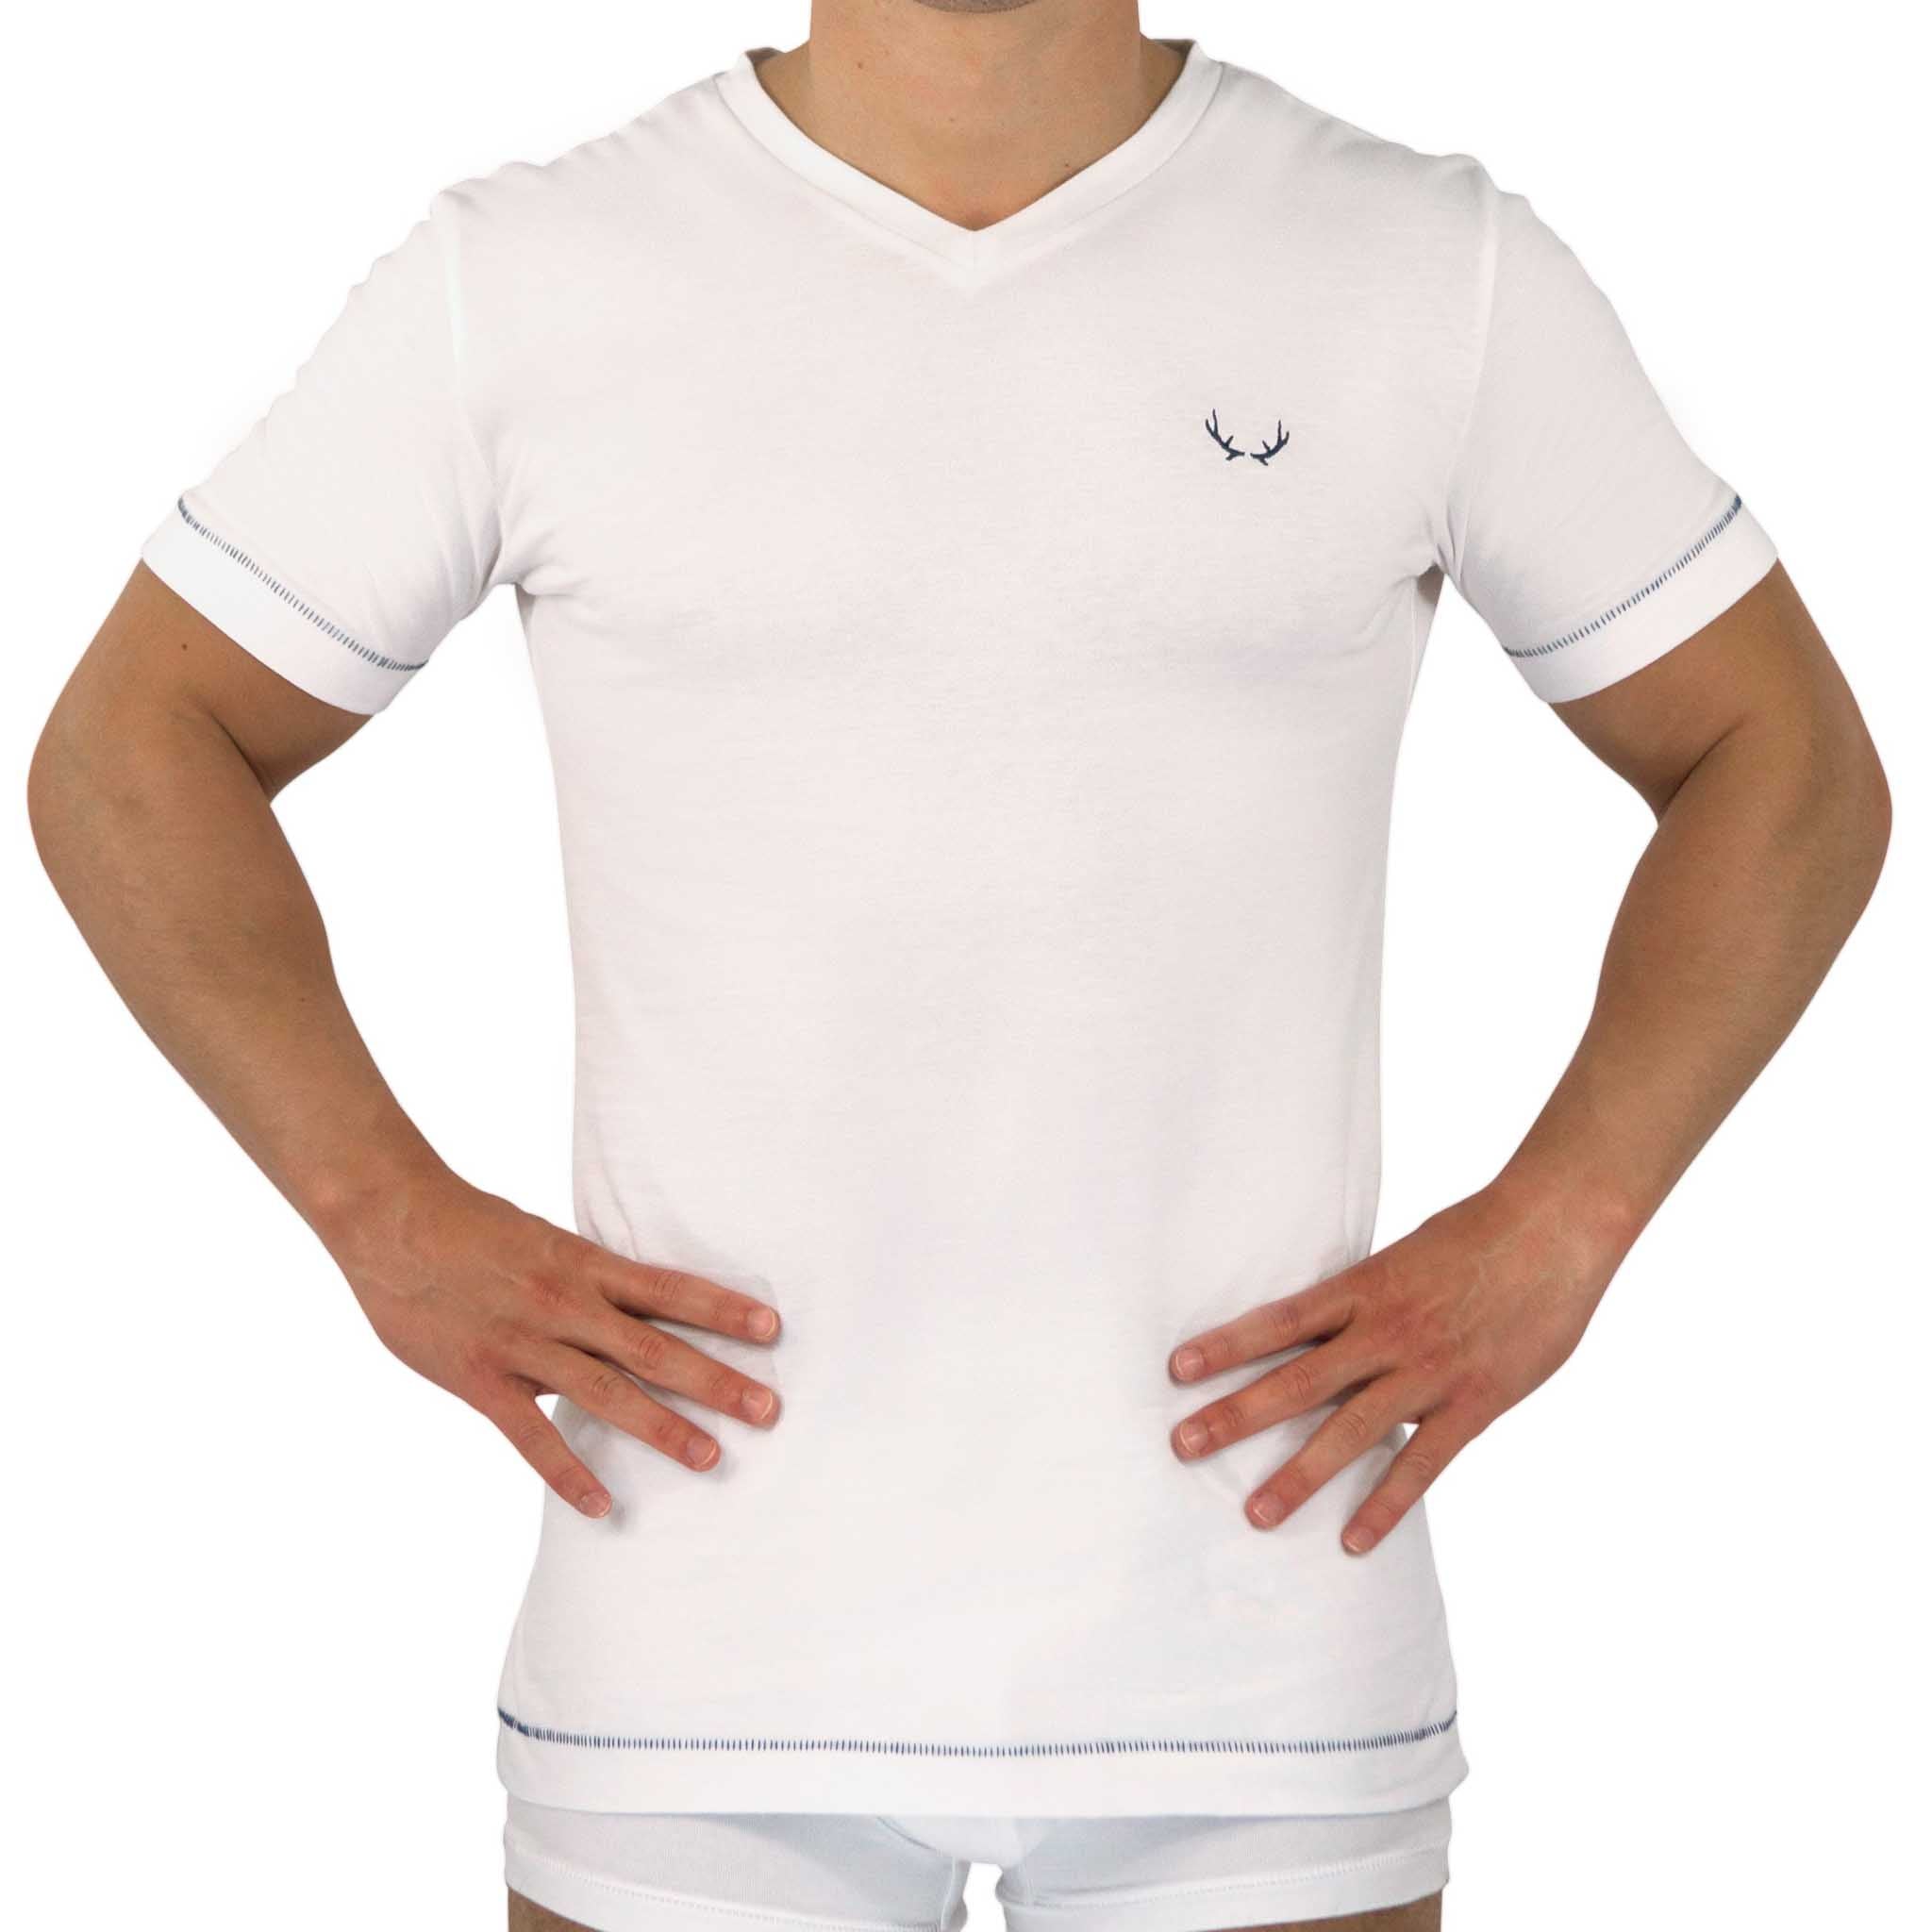 White organic cotton T-shirt from Bluebuck